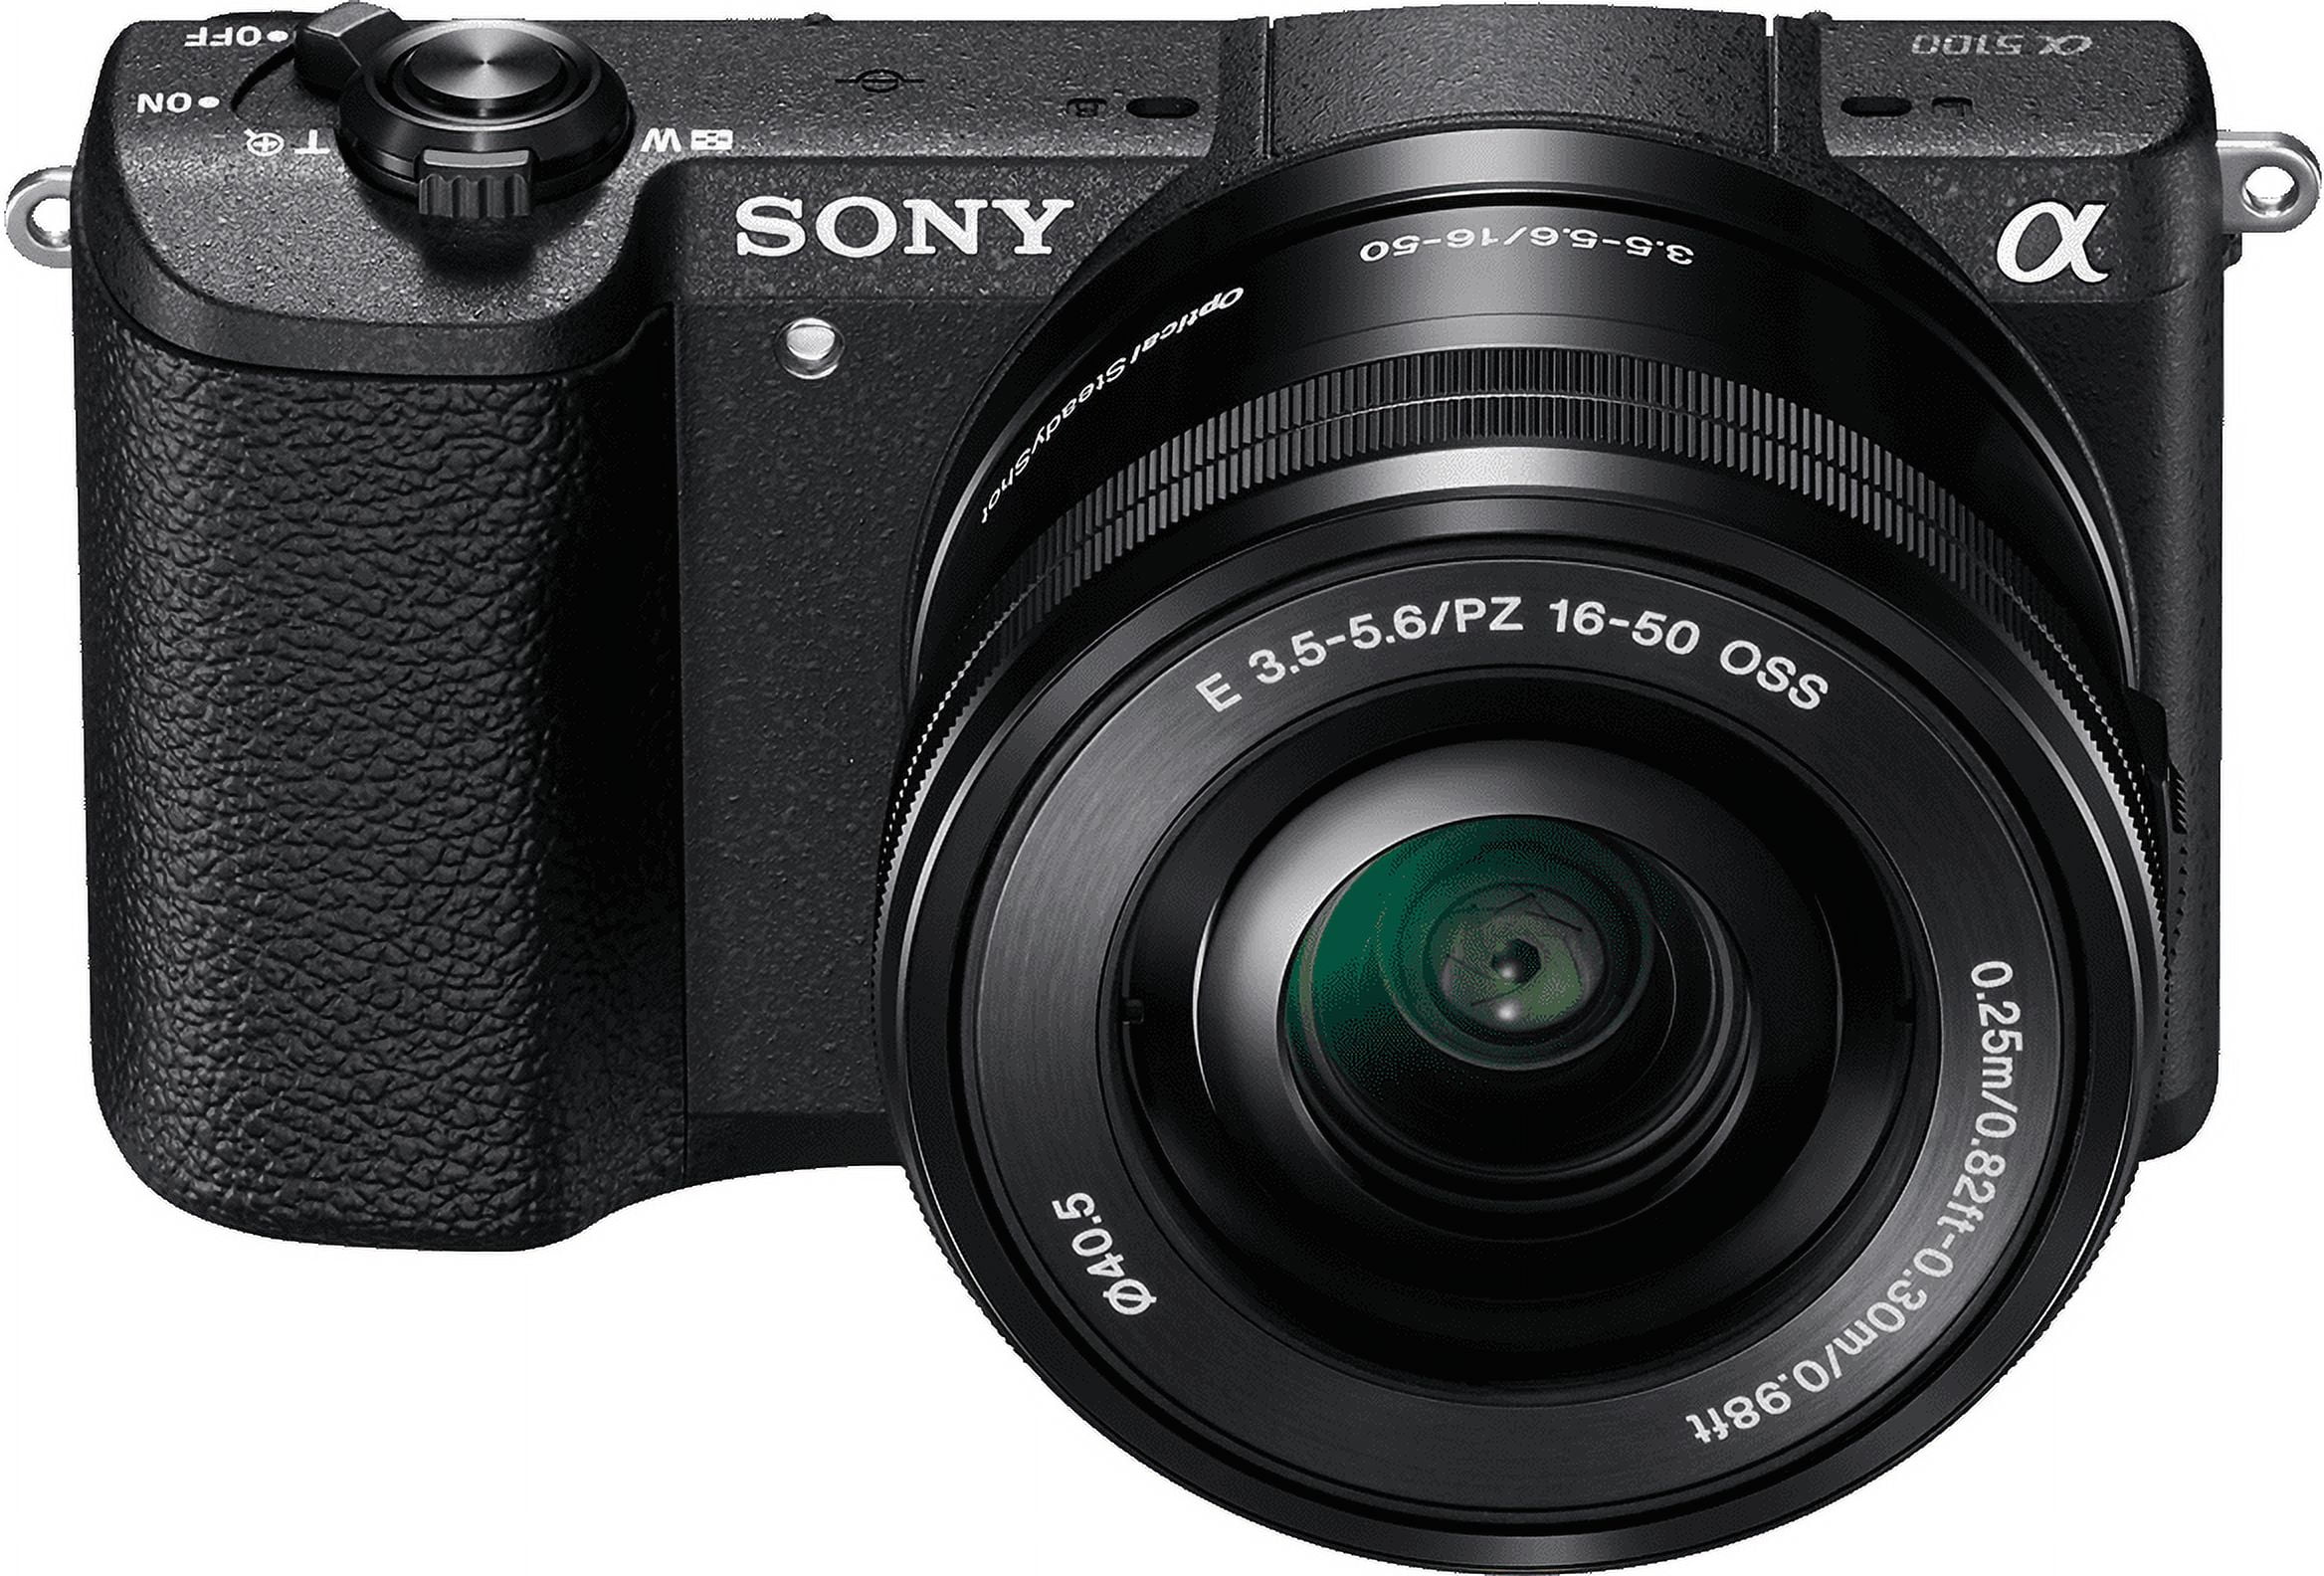 Sony Alpha a5100 Mirrorless Camera w/ 16-50mm lens - Black